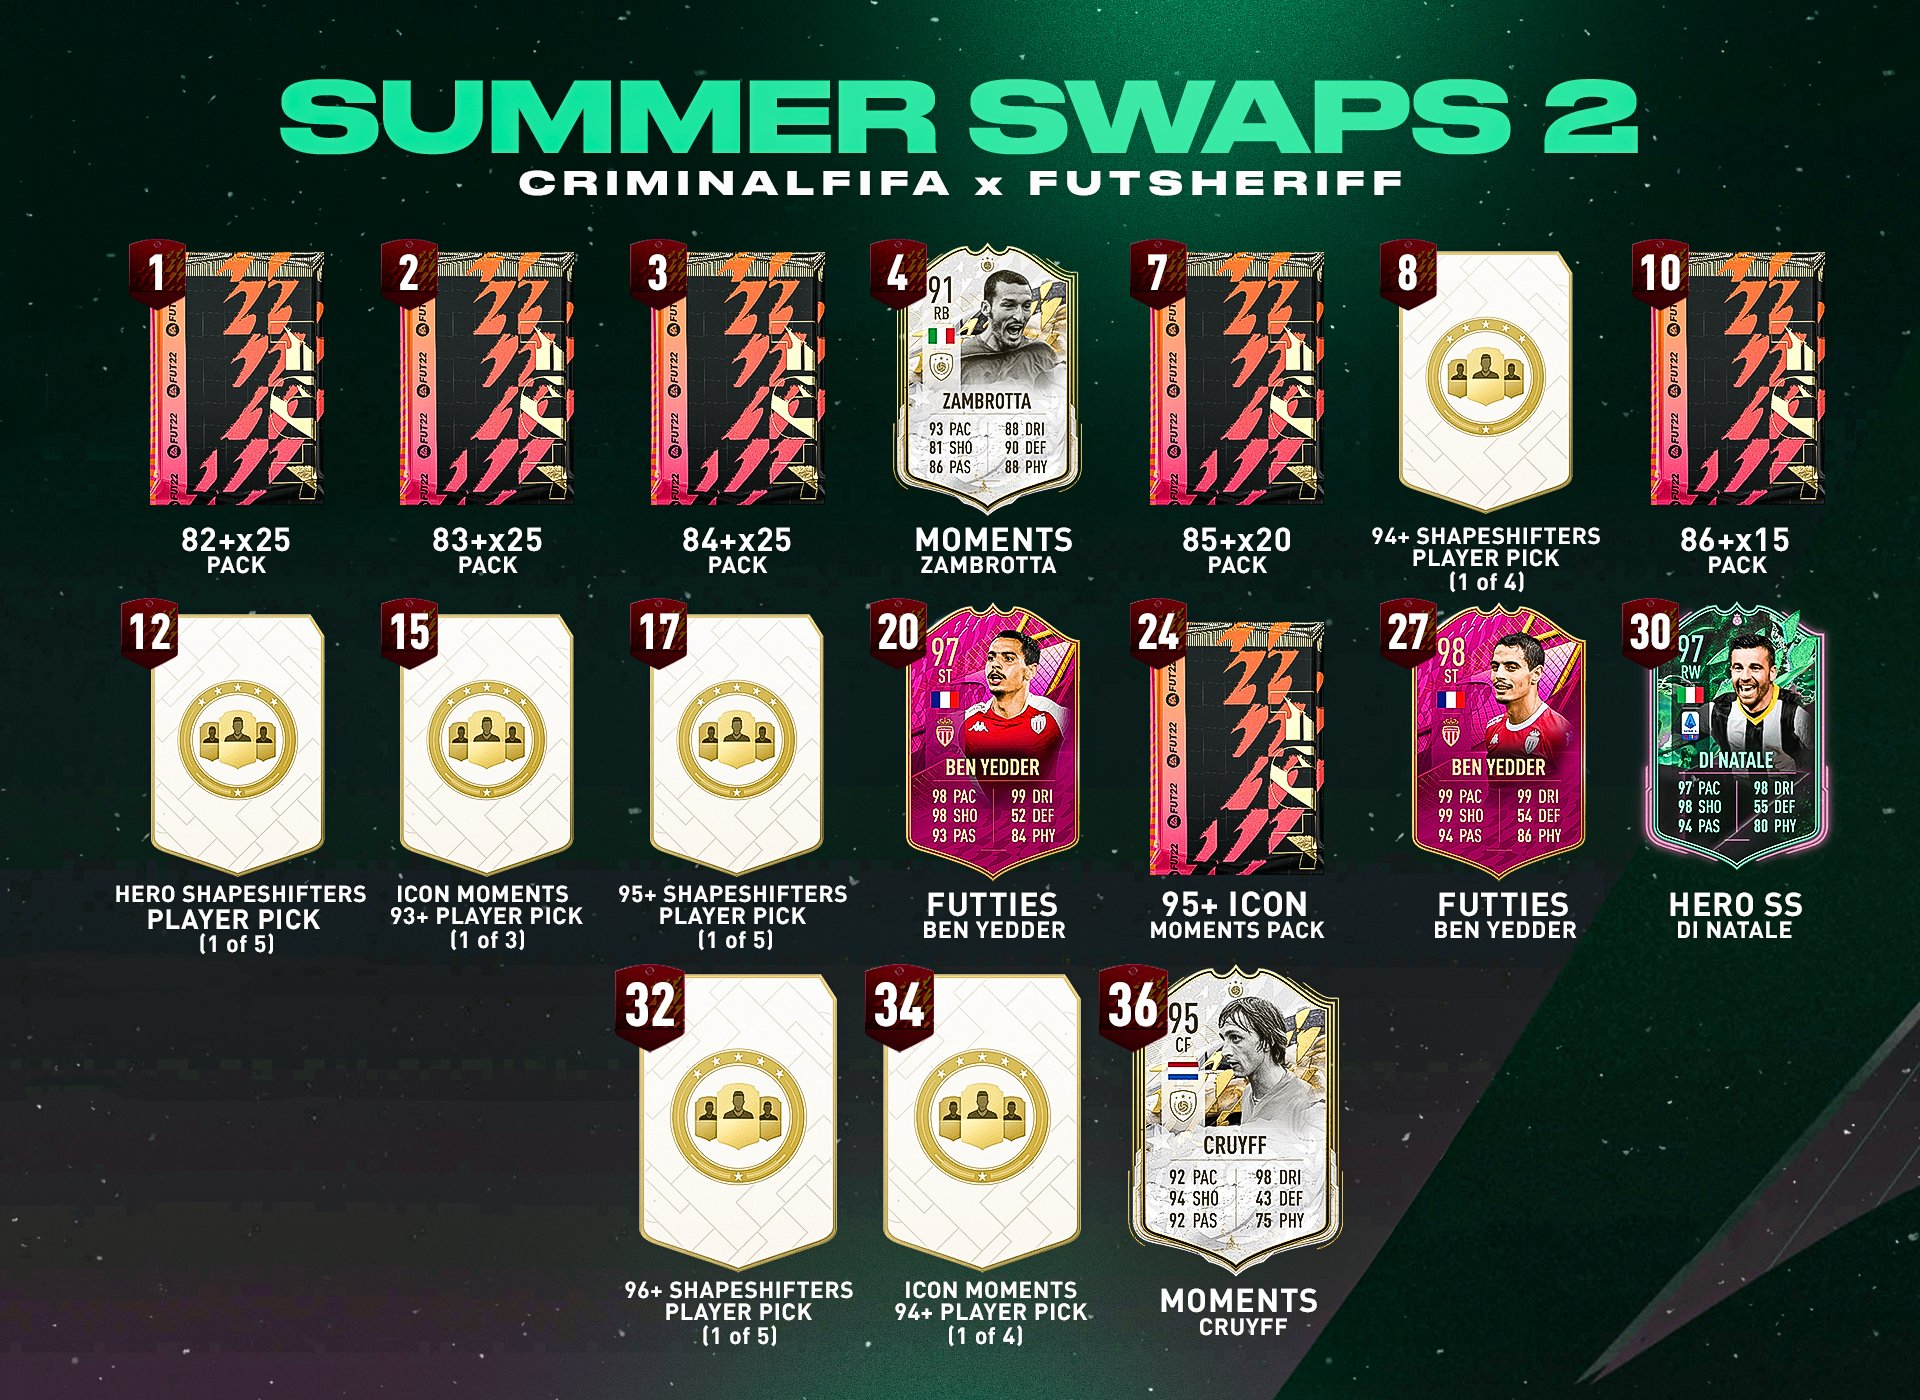 Leaked Summer Swaps 2 rewards